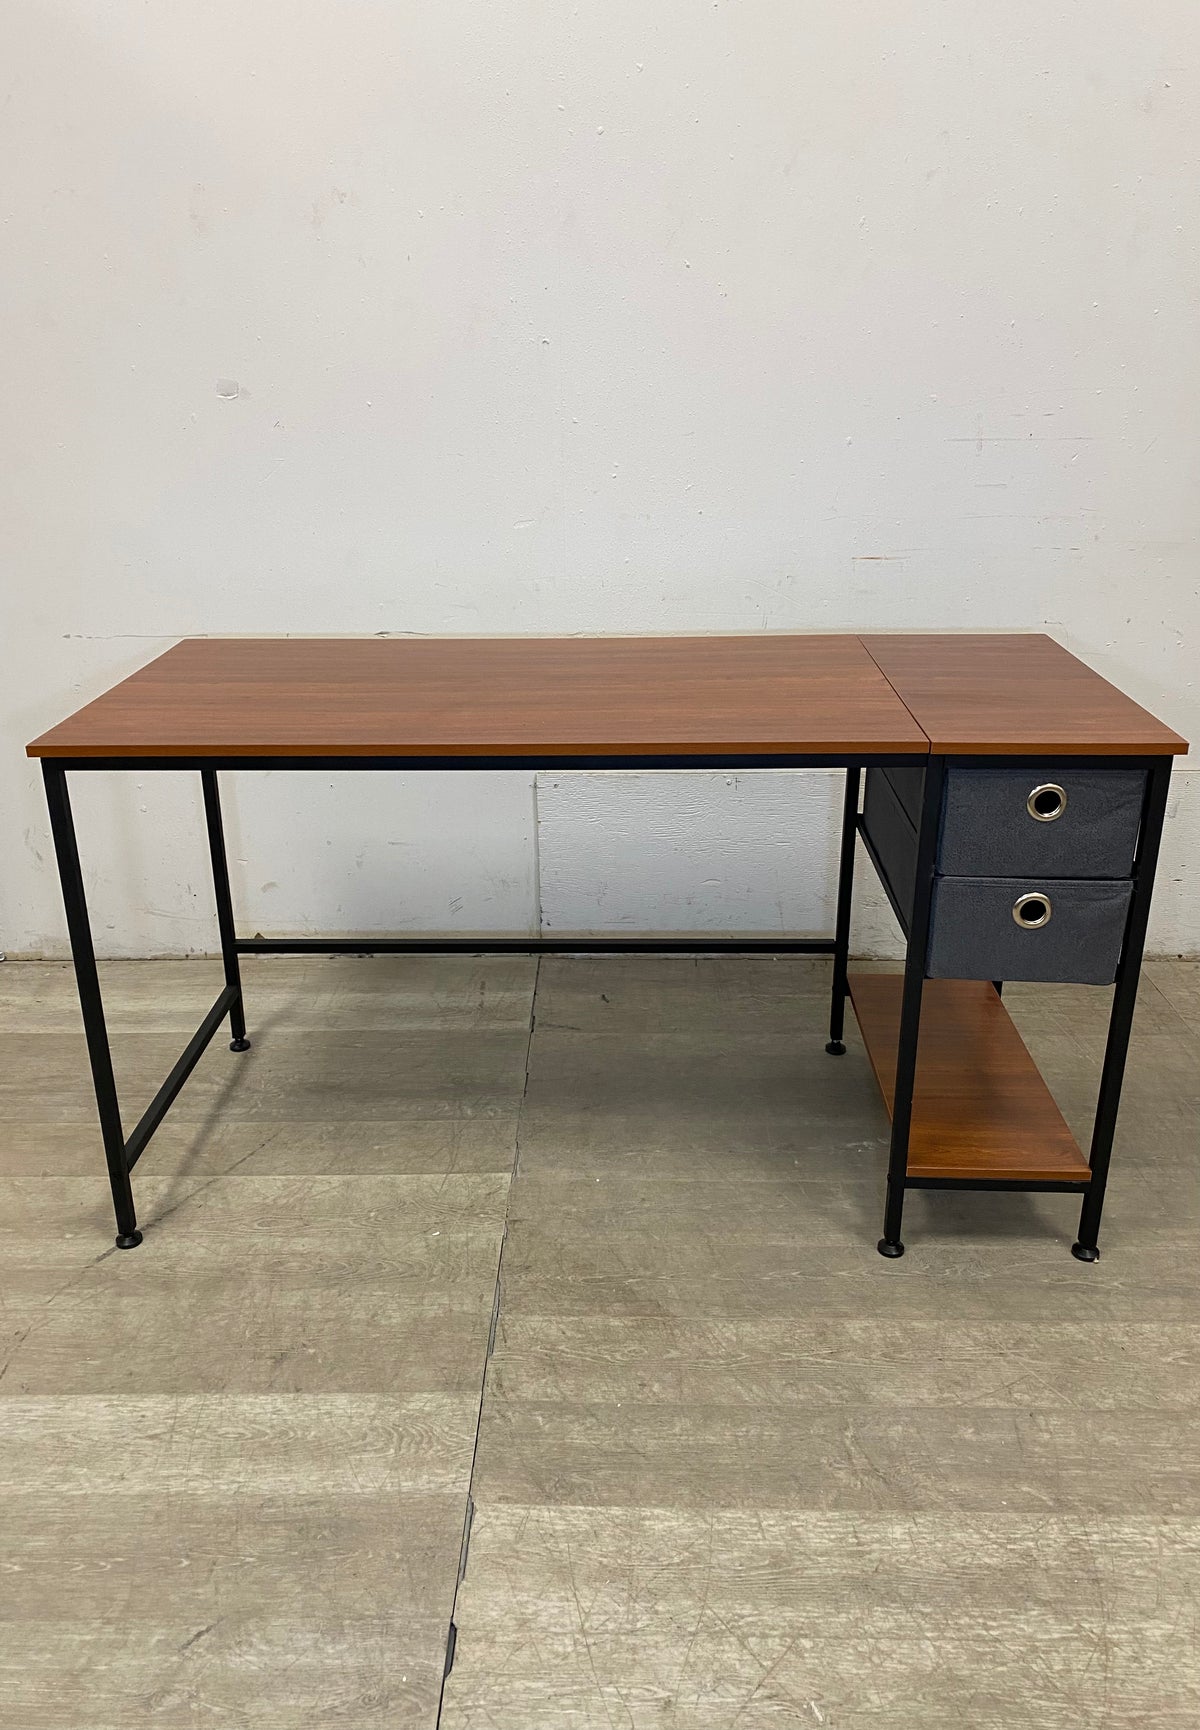 Vintage Style Desk with Storage